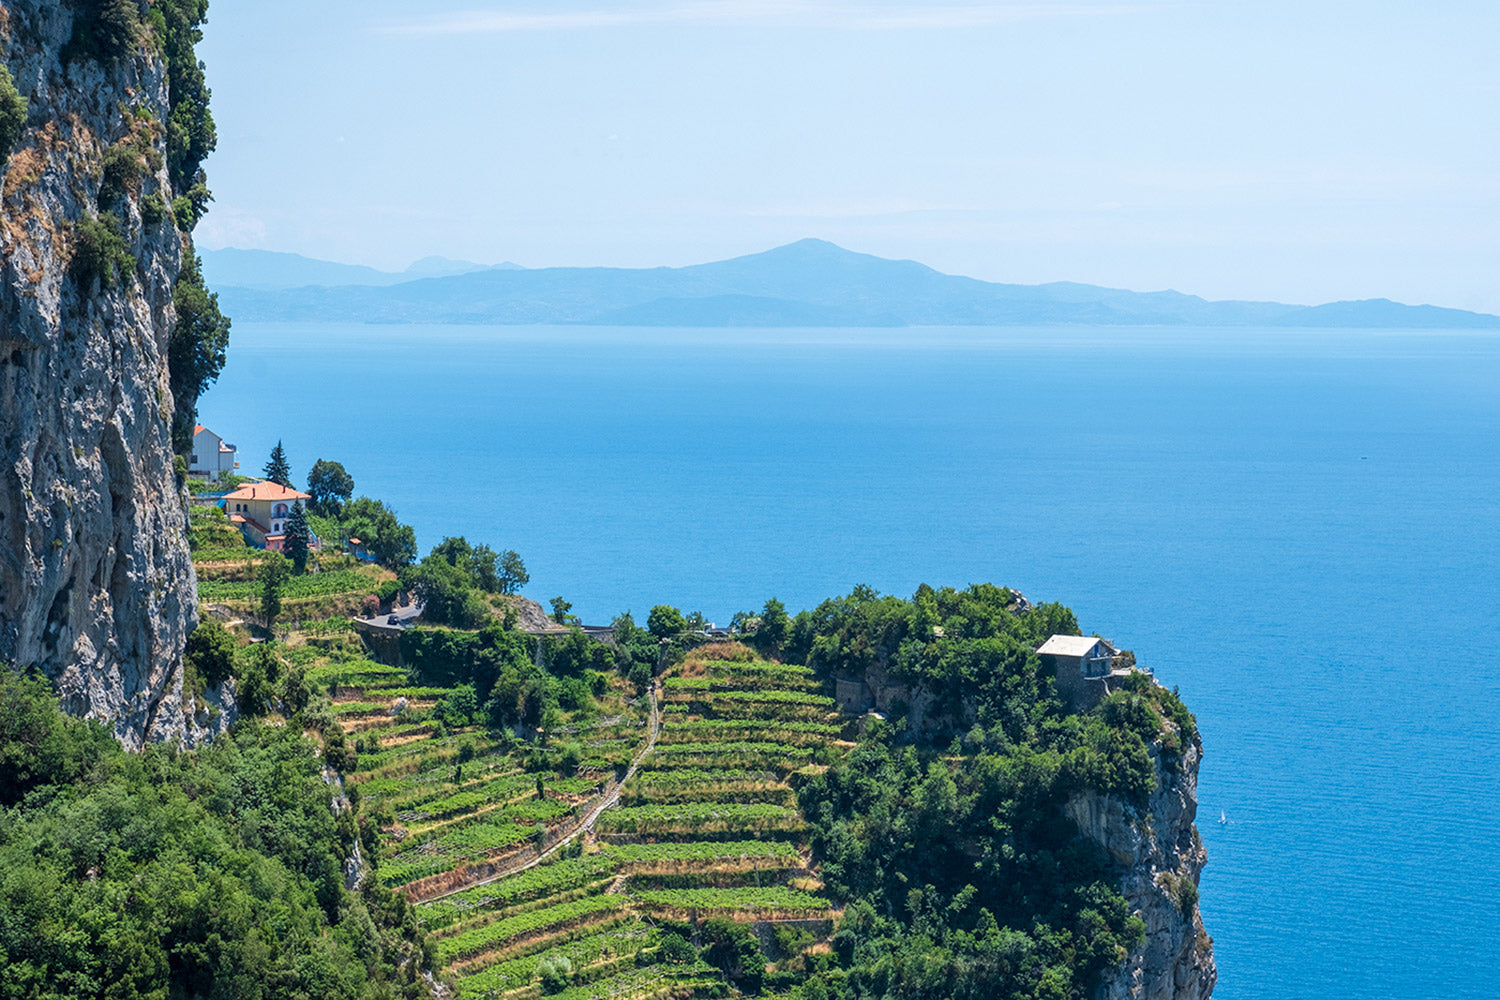 Breath taking scenery on the Path of the Gods or Il Sentiero degli Dei on the Amalfi Coast, Italy.